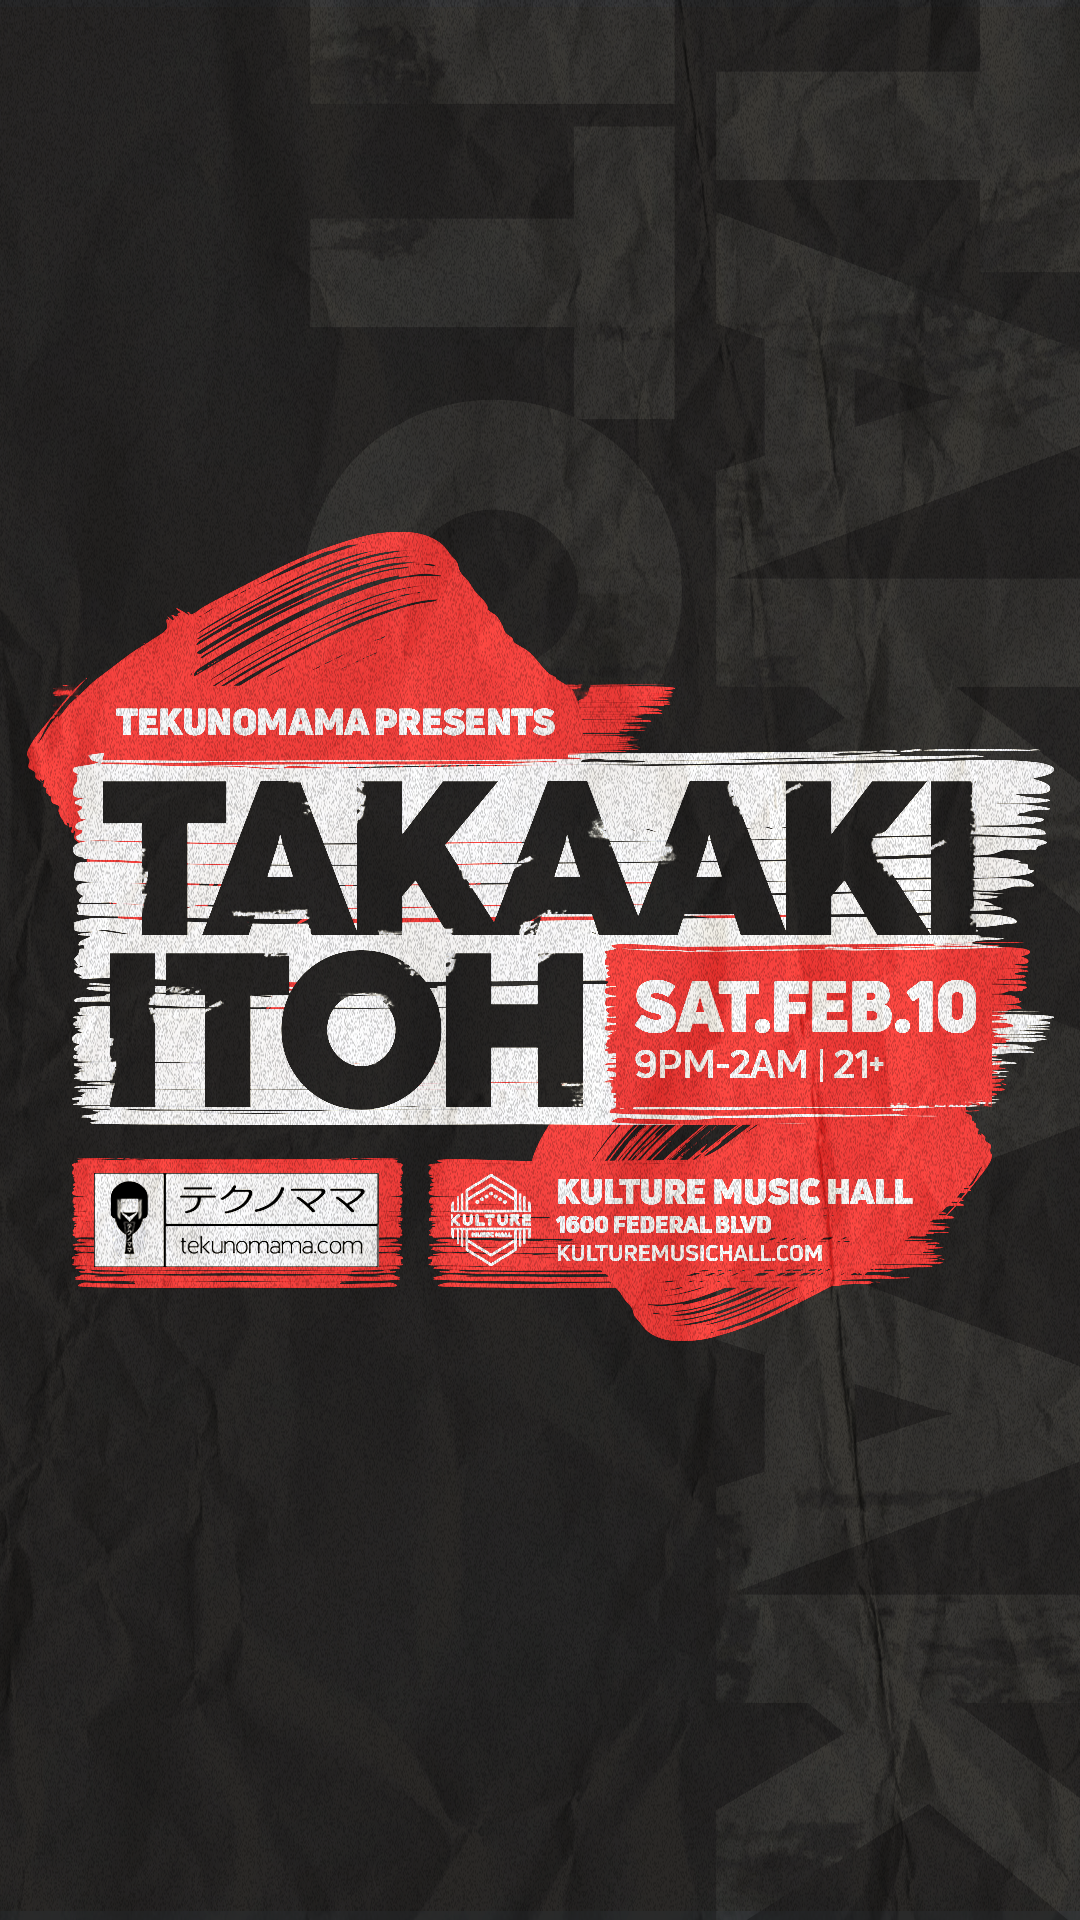 TEKUNOMAMA PRESENTS: TAKAAKI ITOH - フライヤー表